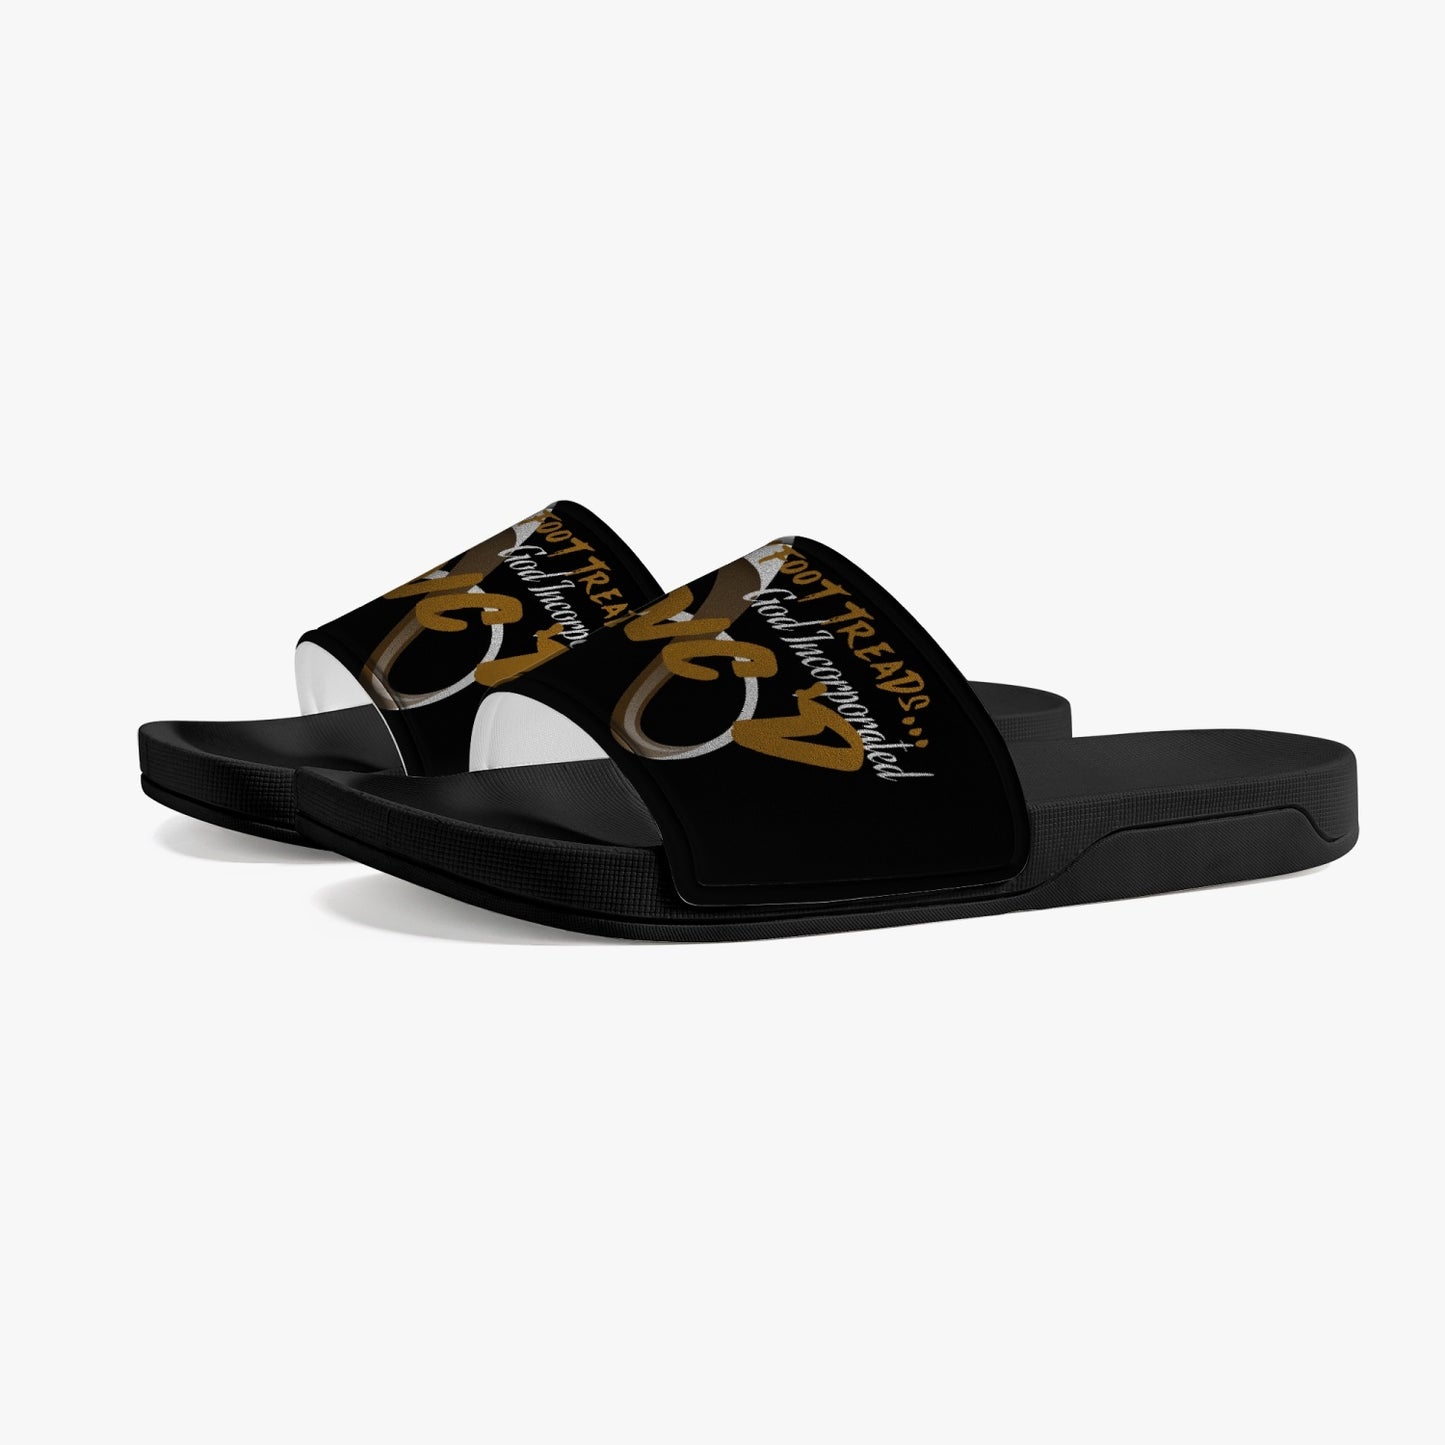 G-Inc'd Tread Sandals (Black) Unisex